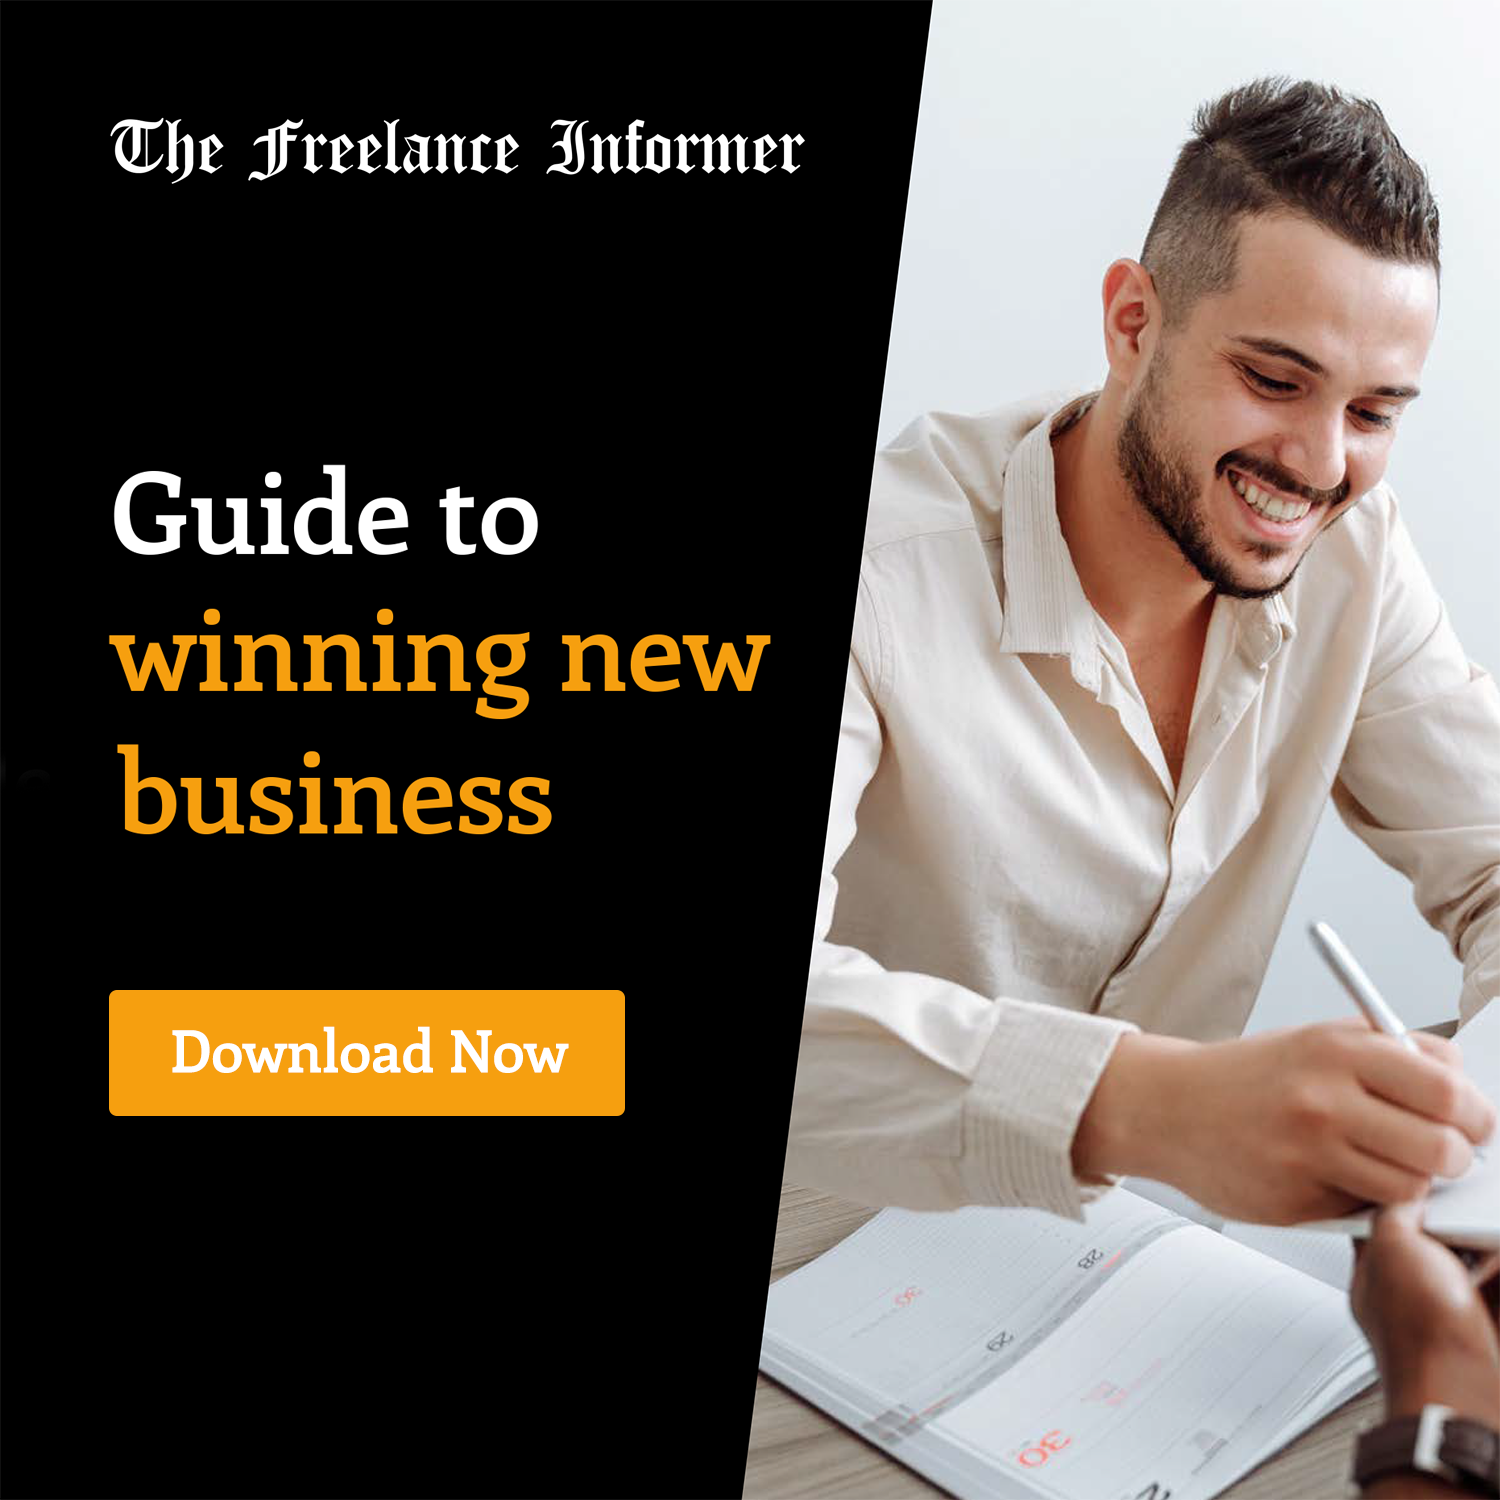 Freelance Informer’s Guide to Winning New Business